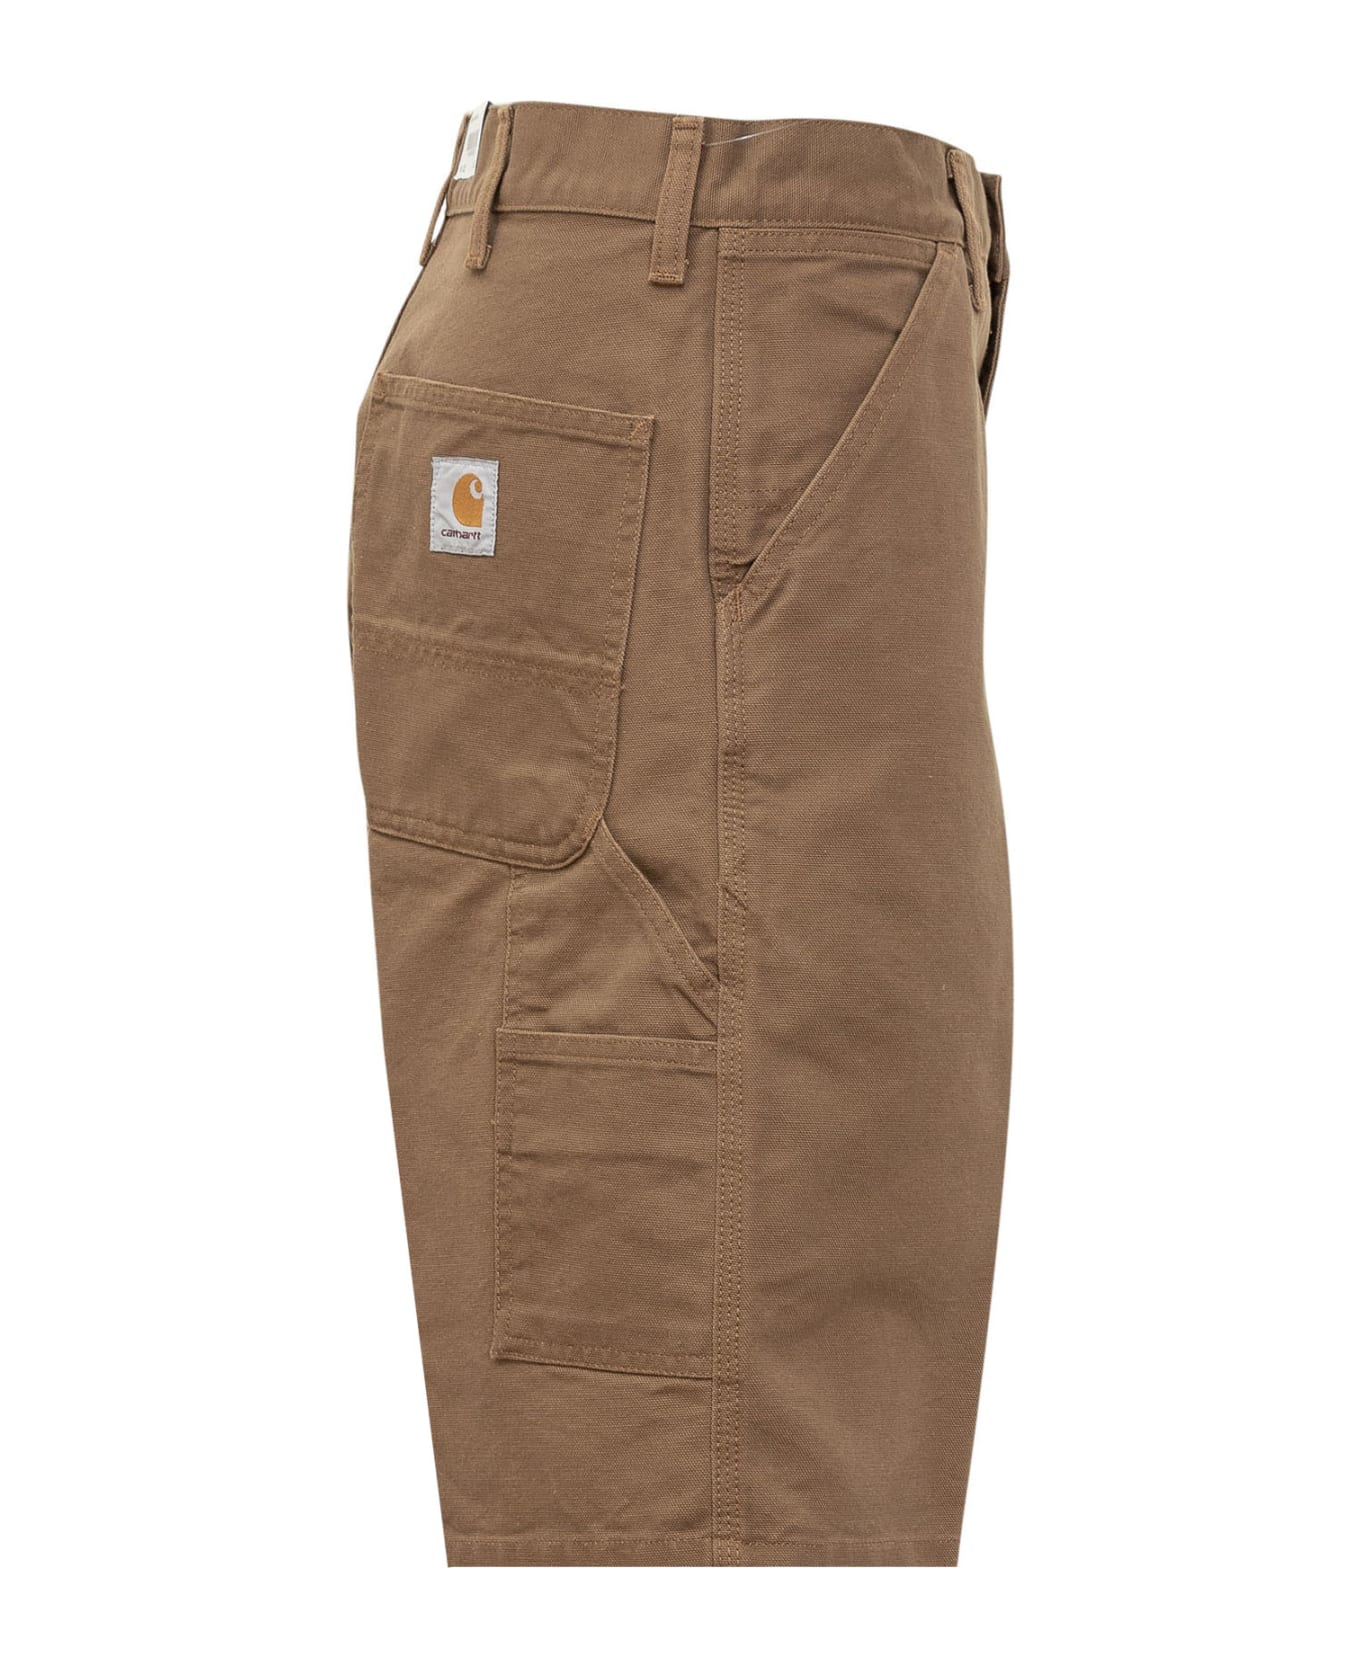 Carhartt Cotton Shorts - BOURBON AGED CANVAS